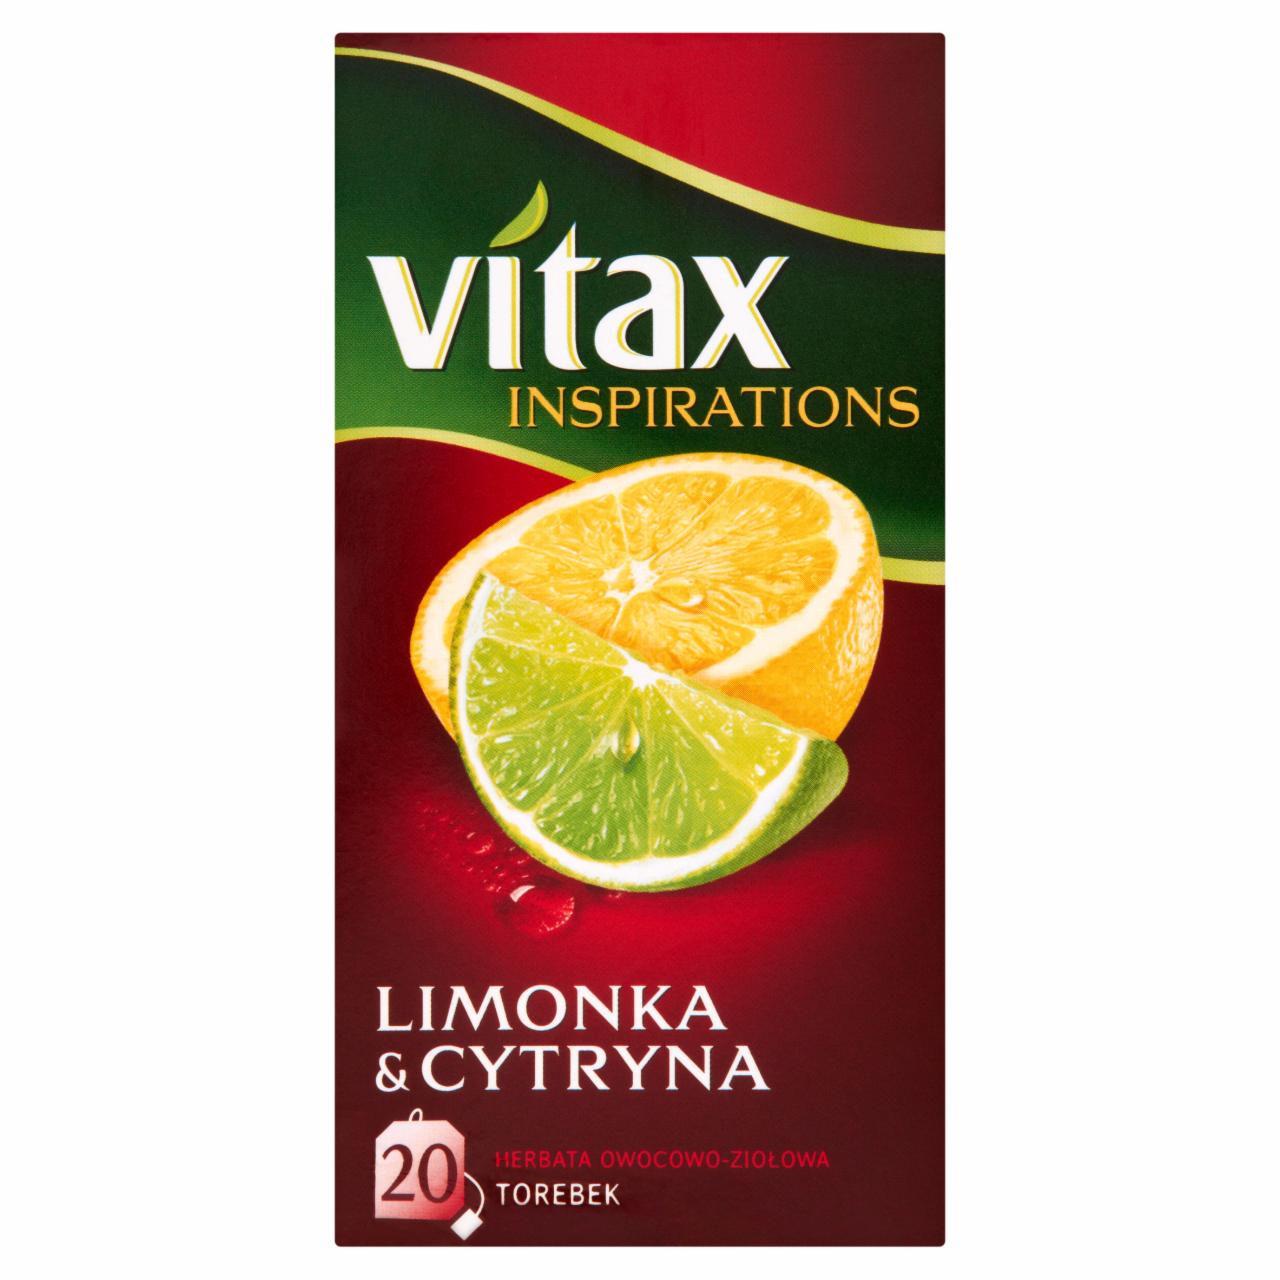 Photo - Vitax Inspirations Lime and Lemon Fruit and Herbal Tea 40 g (20 Bags)